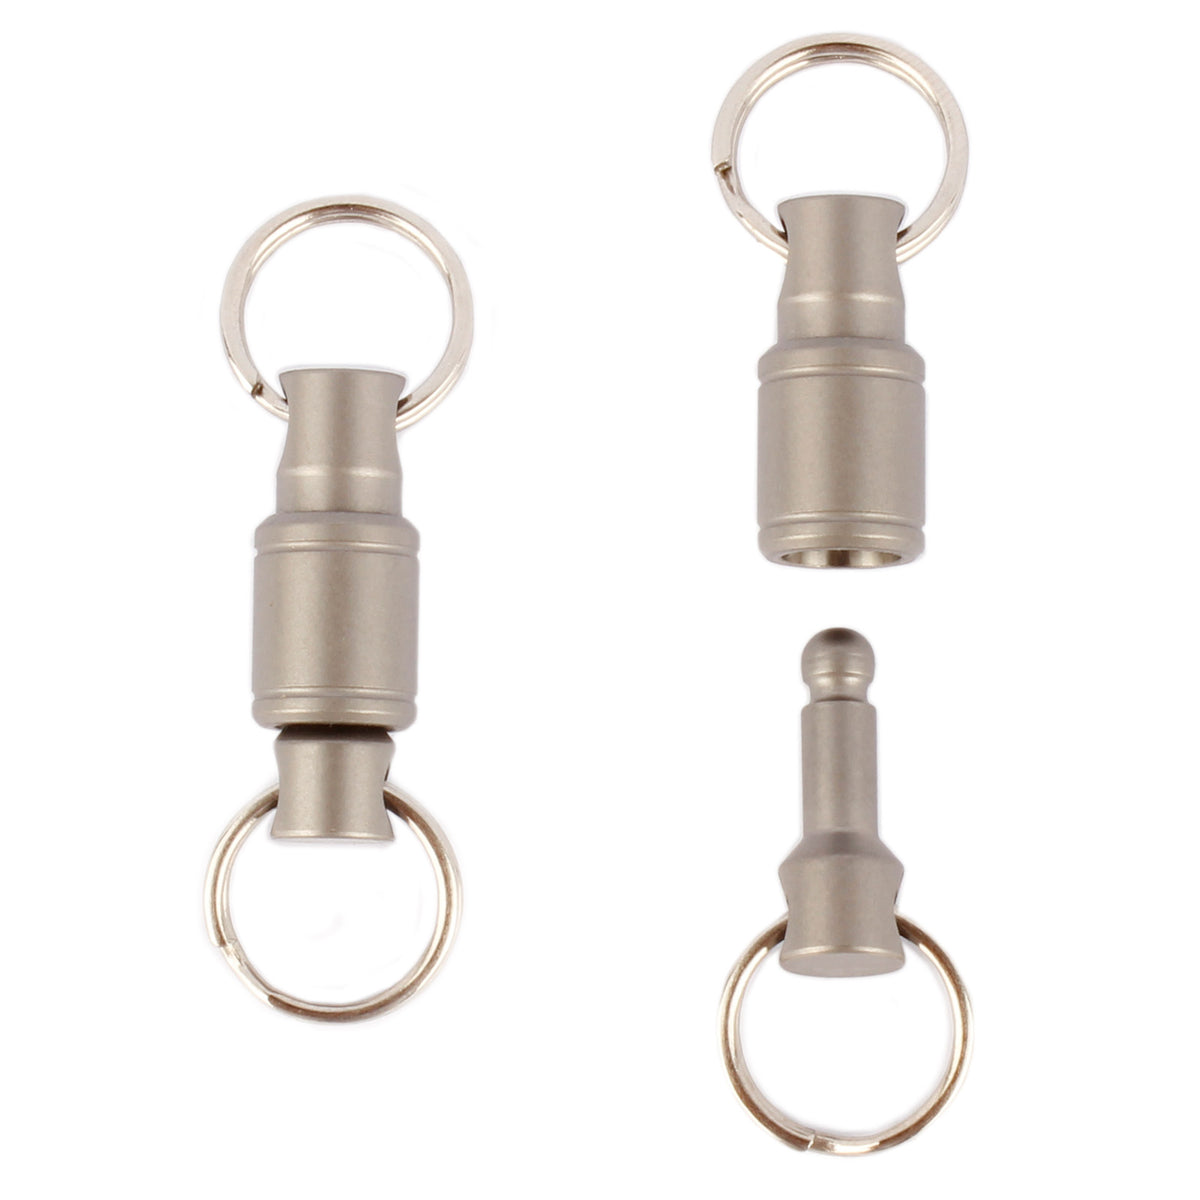 Real Pure Titanium Key Ring TC4 Super Lightweight Hanging Buckle Key Rings  Holder Toasted Blue Titanium Keychain Creative Gift